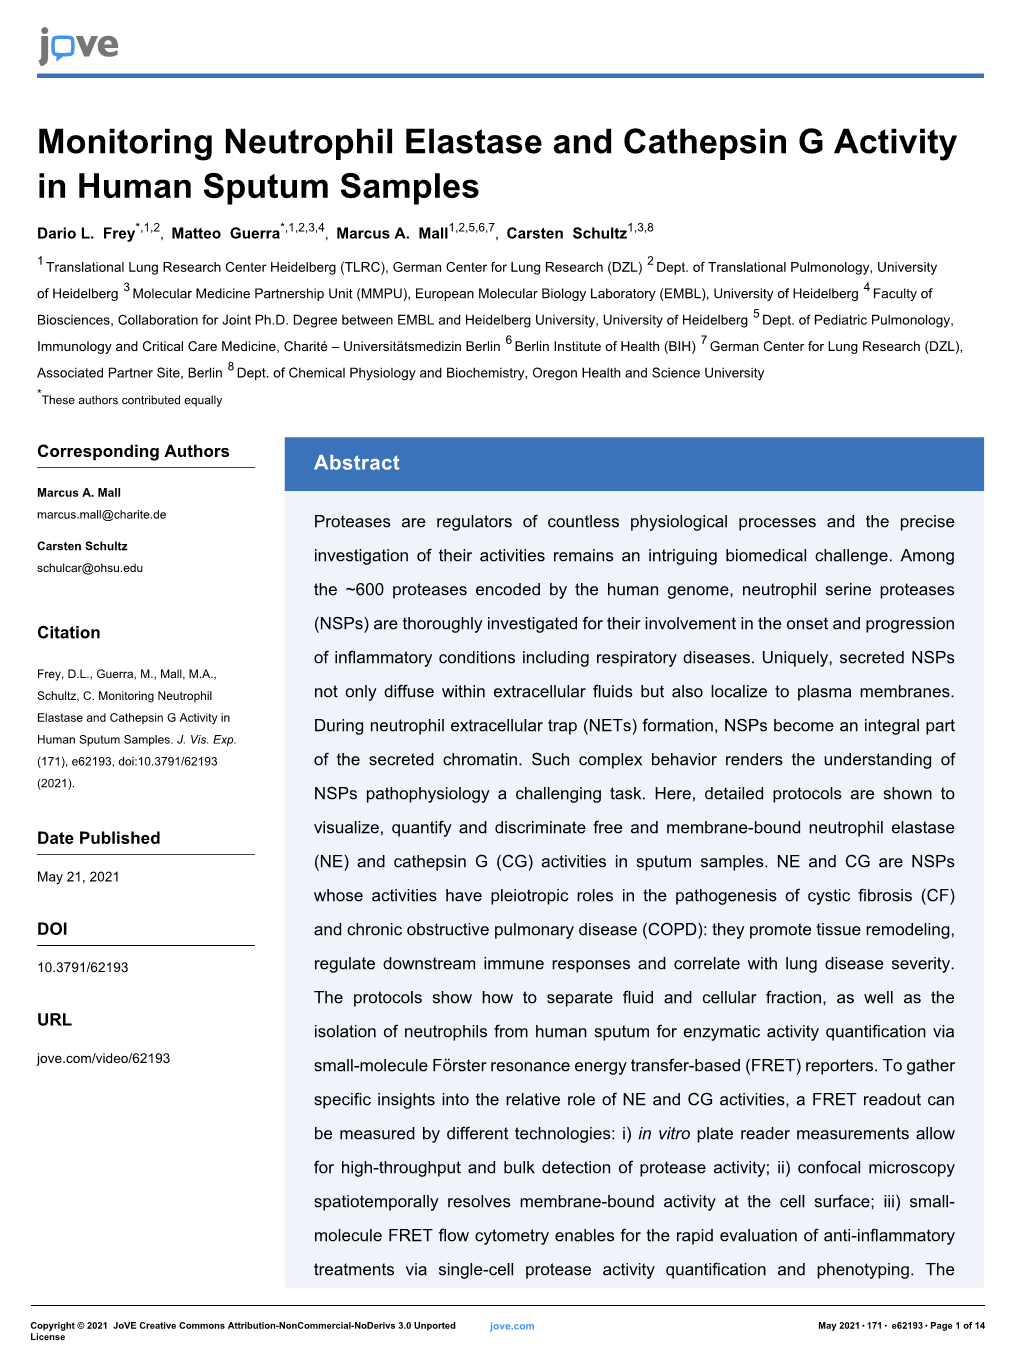 Monitoring Neutrophil Elastase and Cathepsin G Activity in Human Sputum Samples